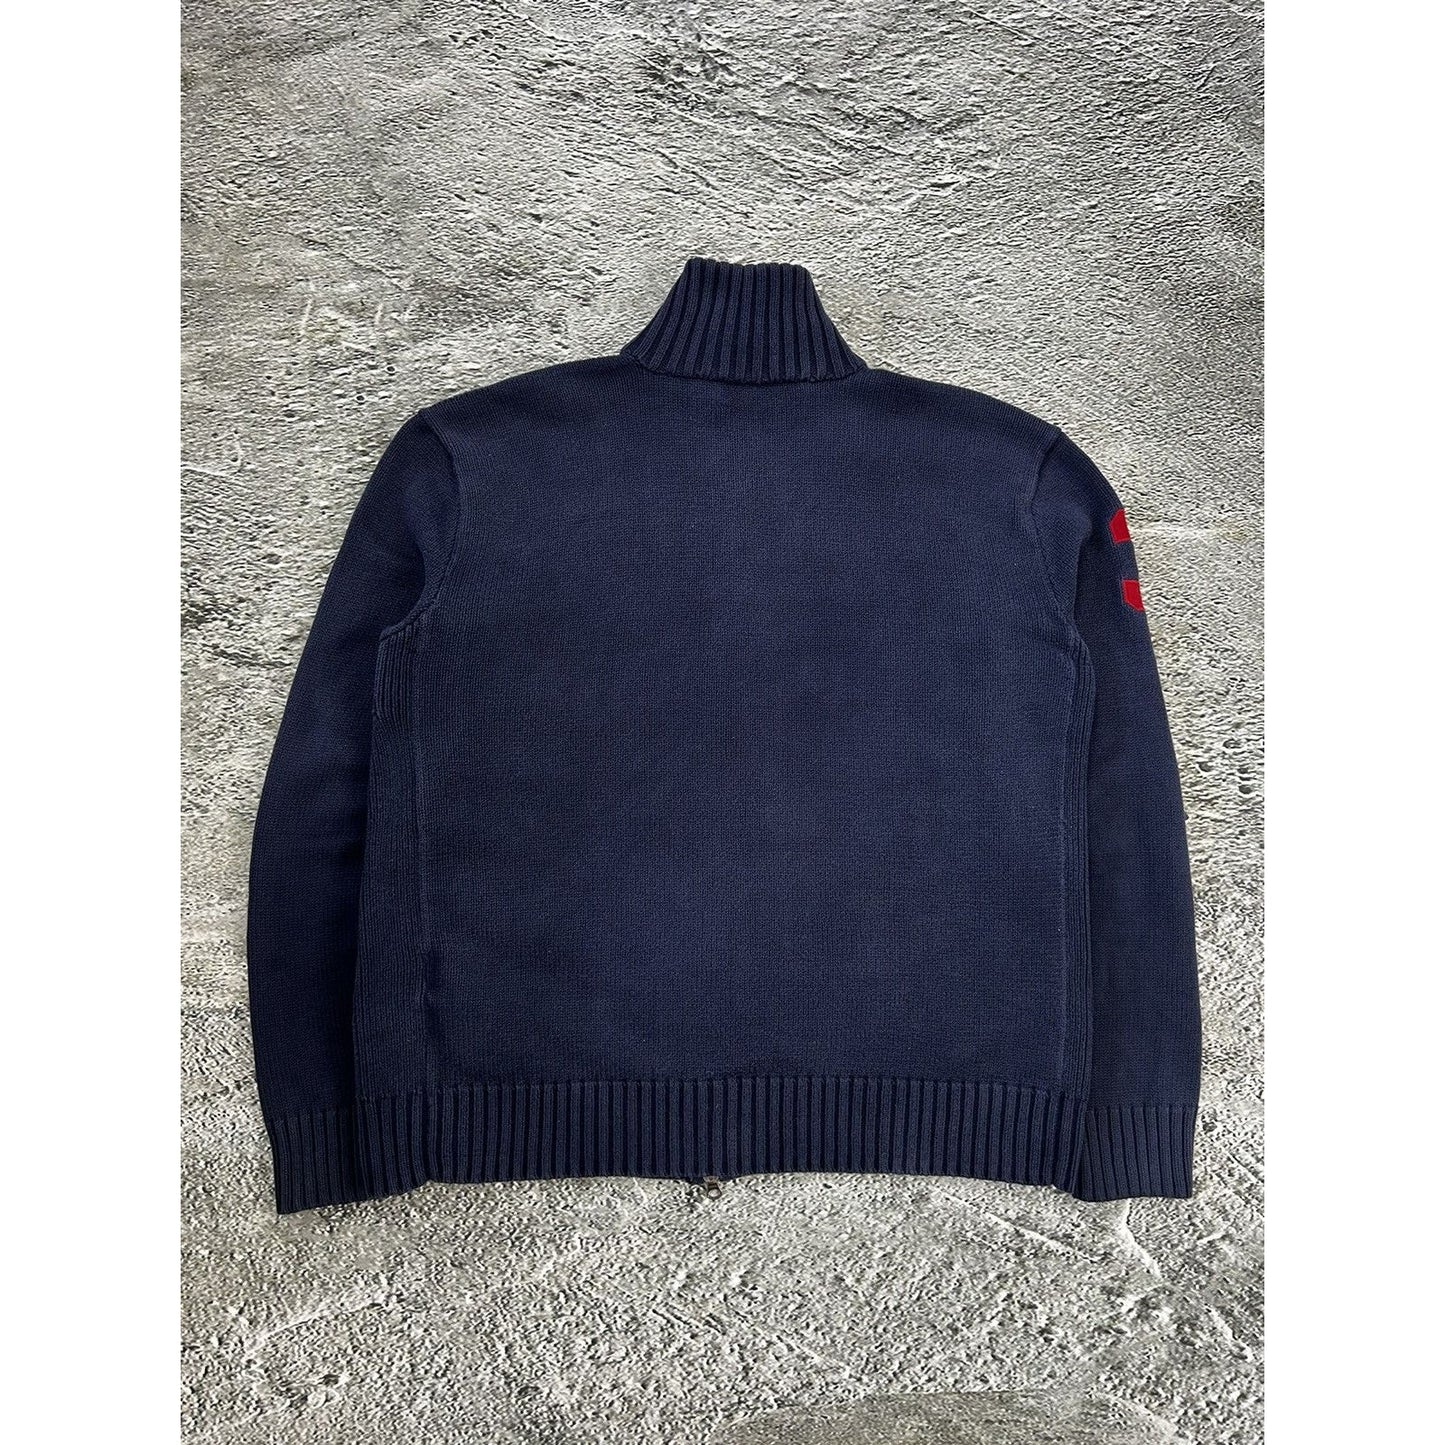 New York Polo Ralph Lauren zip sweater navy knit cardigan